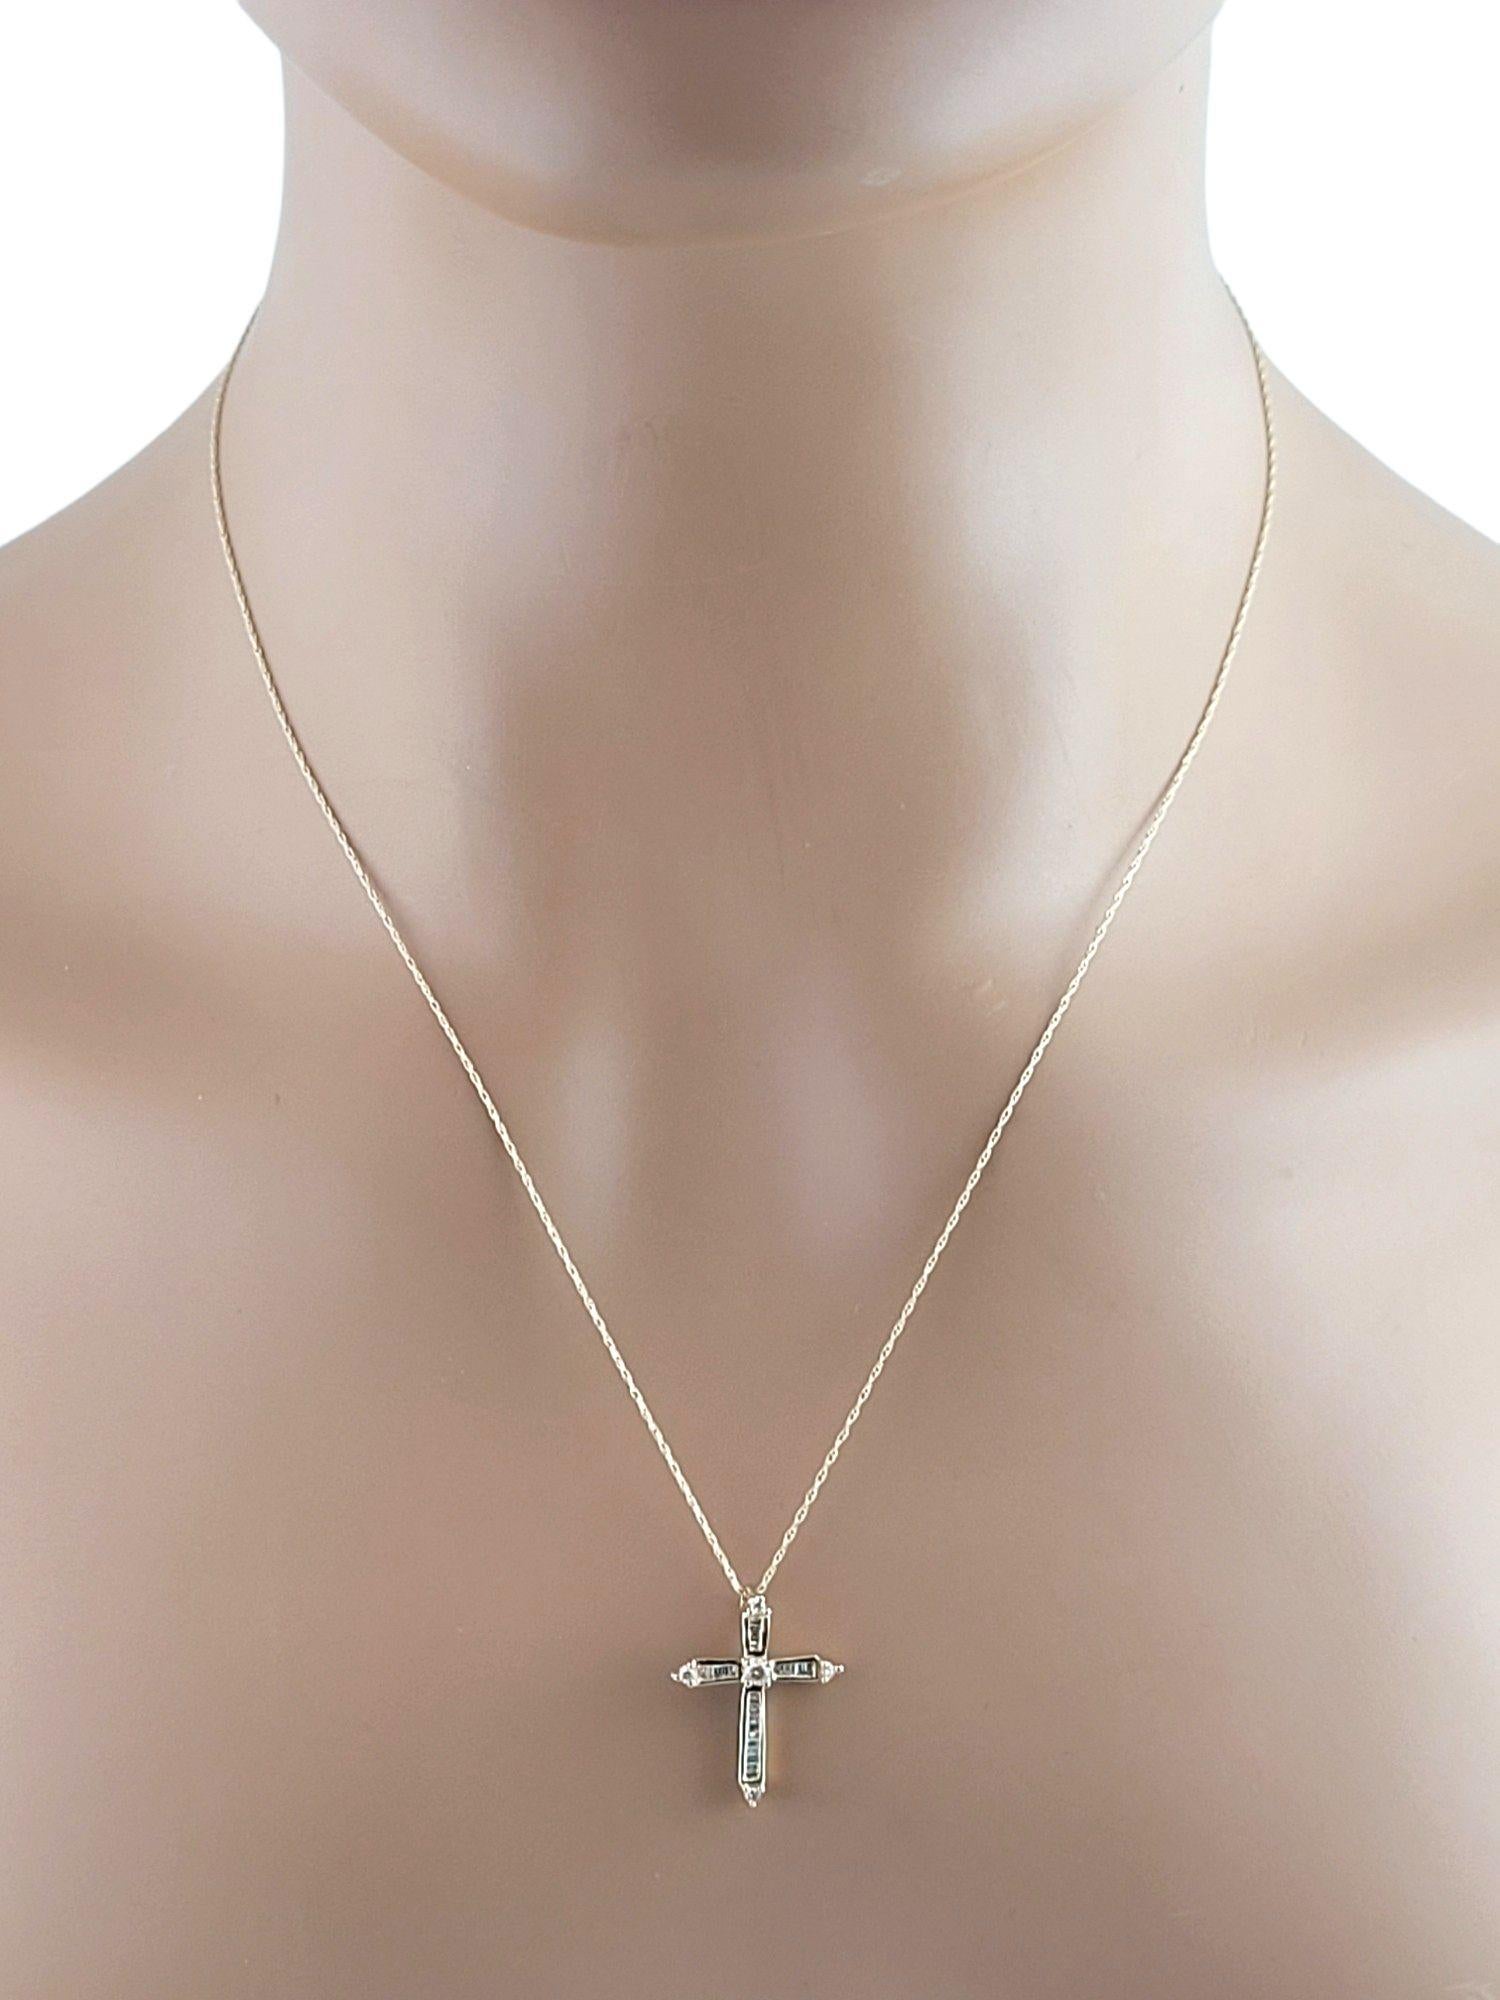 14K Yellow Gold Diamond Cross Pendant Necklace #14819 For Sale 6